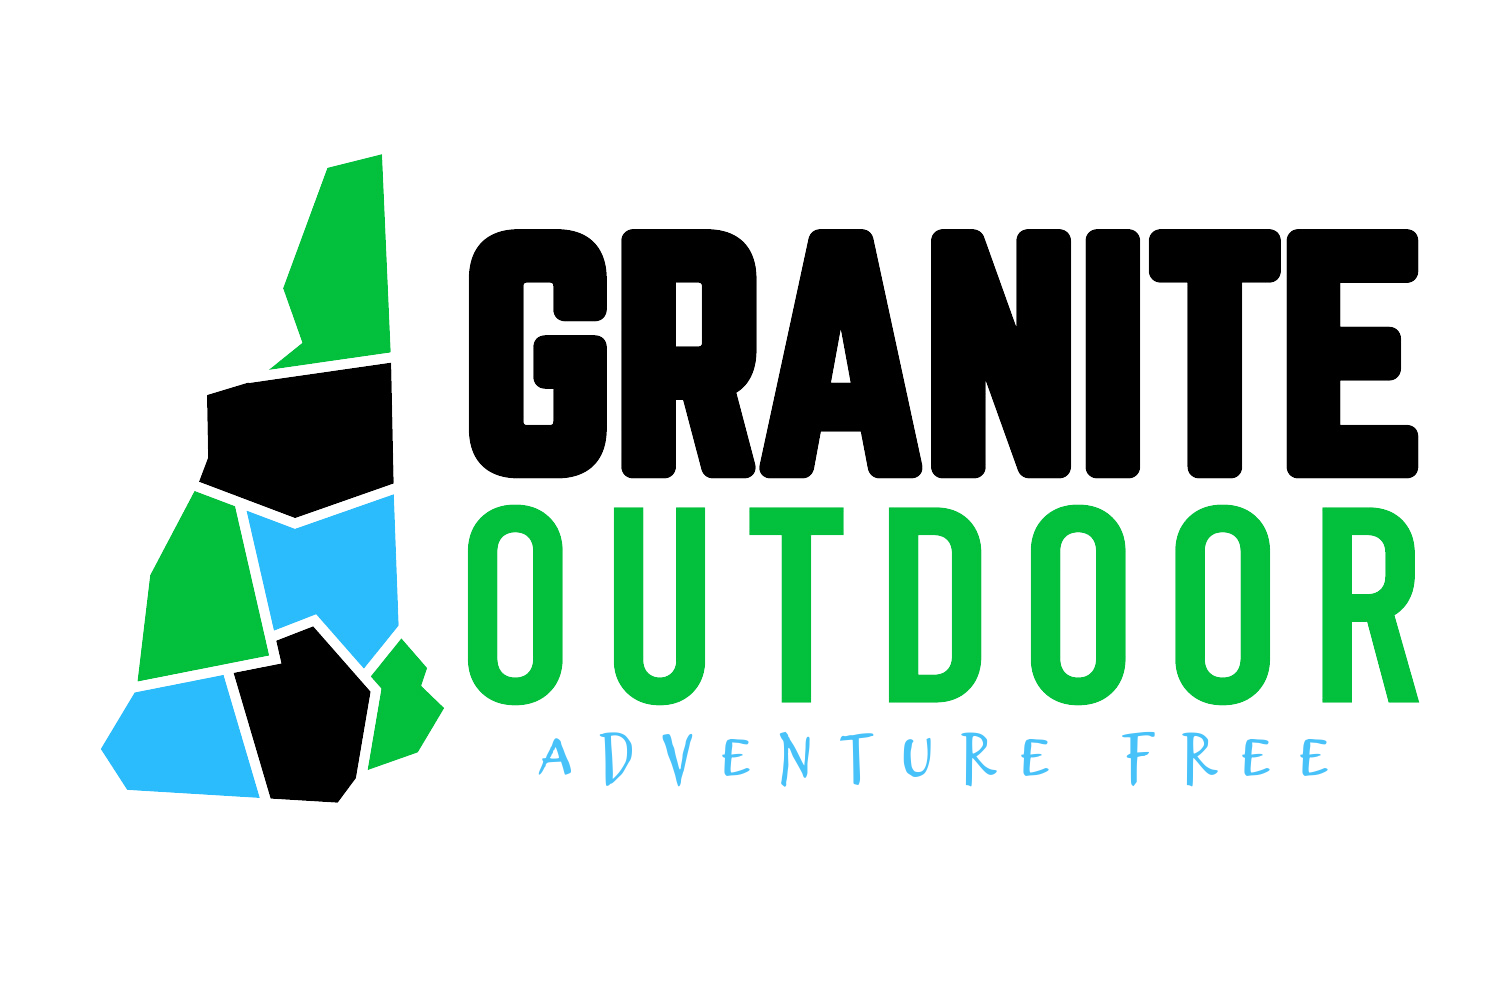 GOA Logo Adventure Free.png